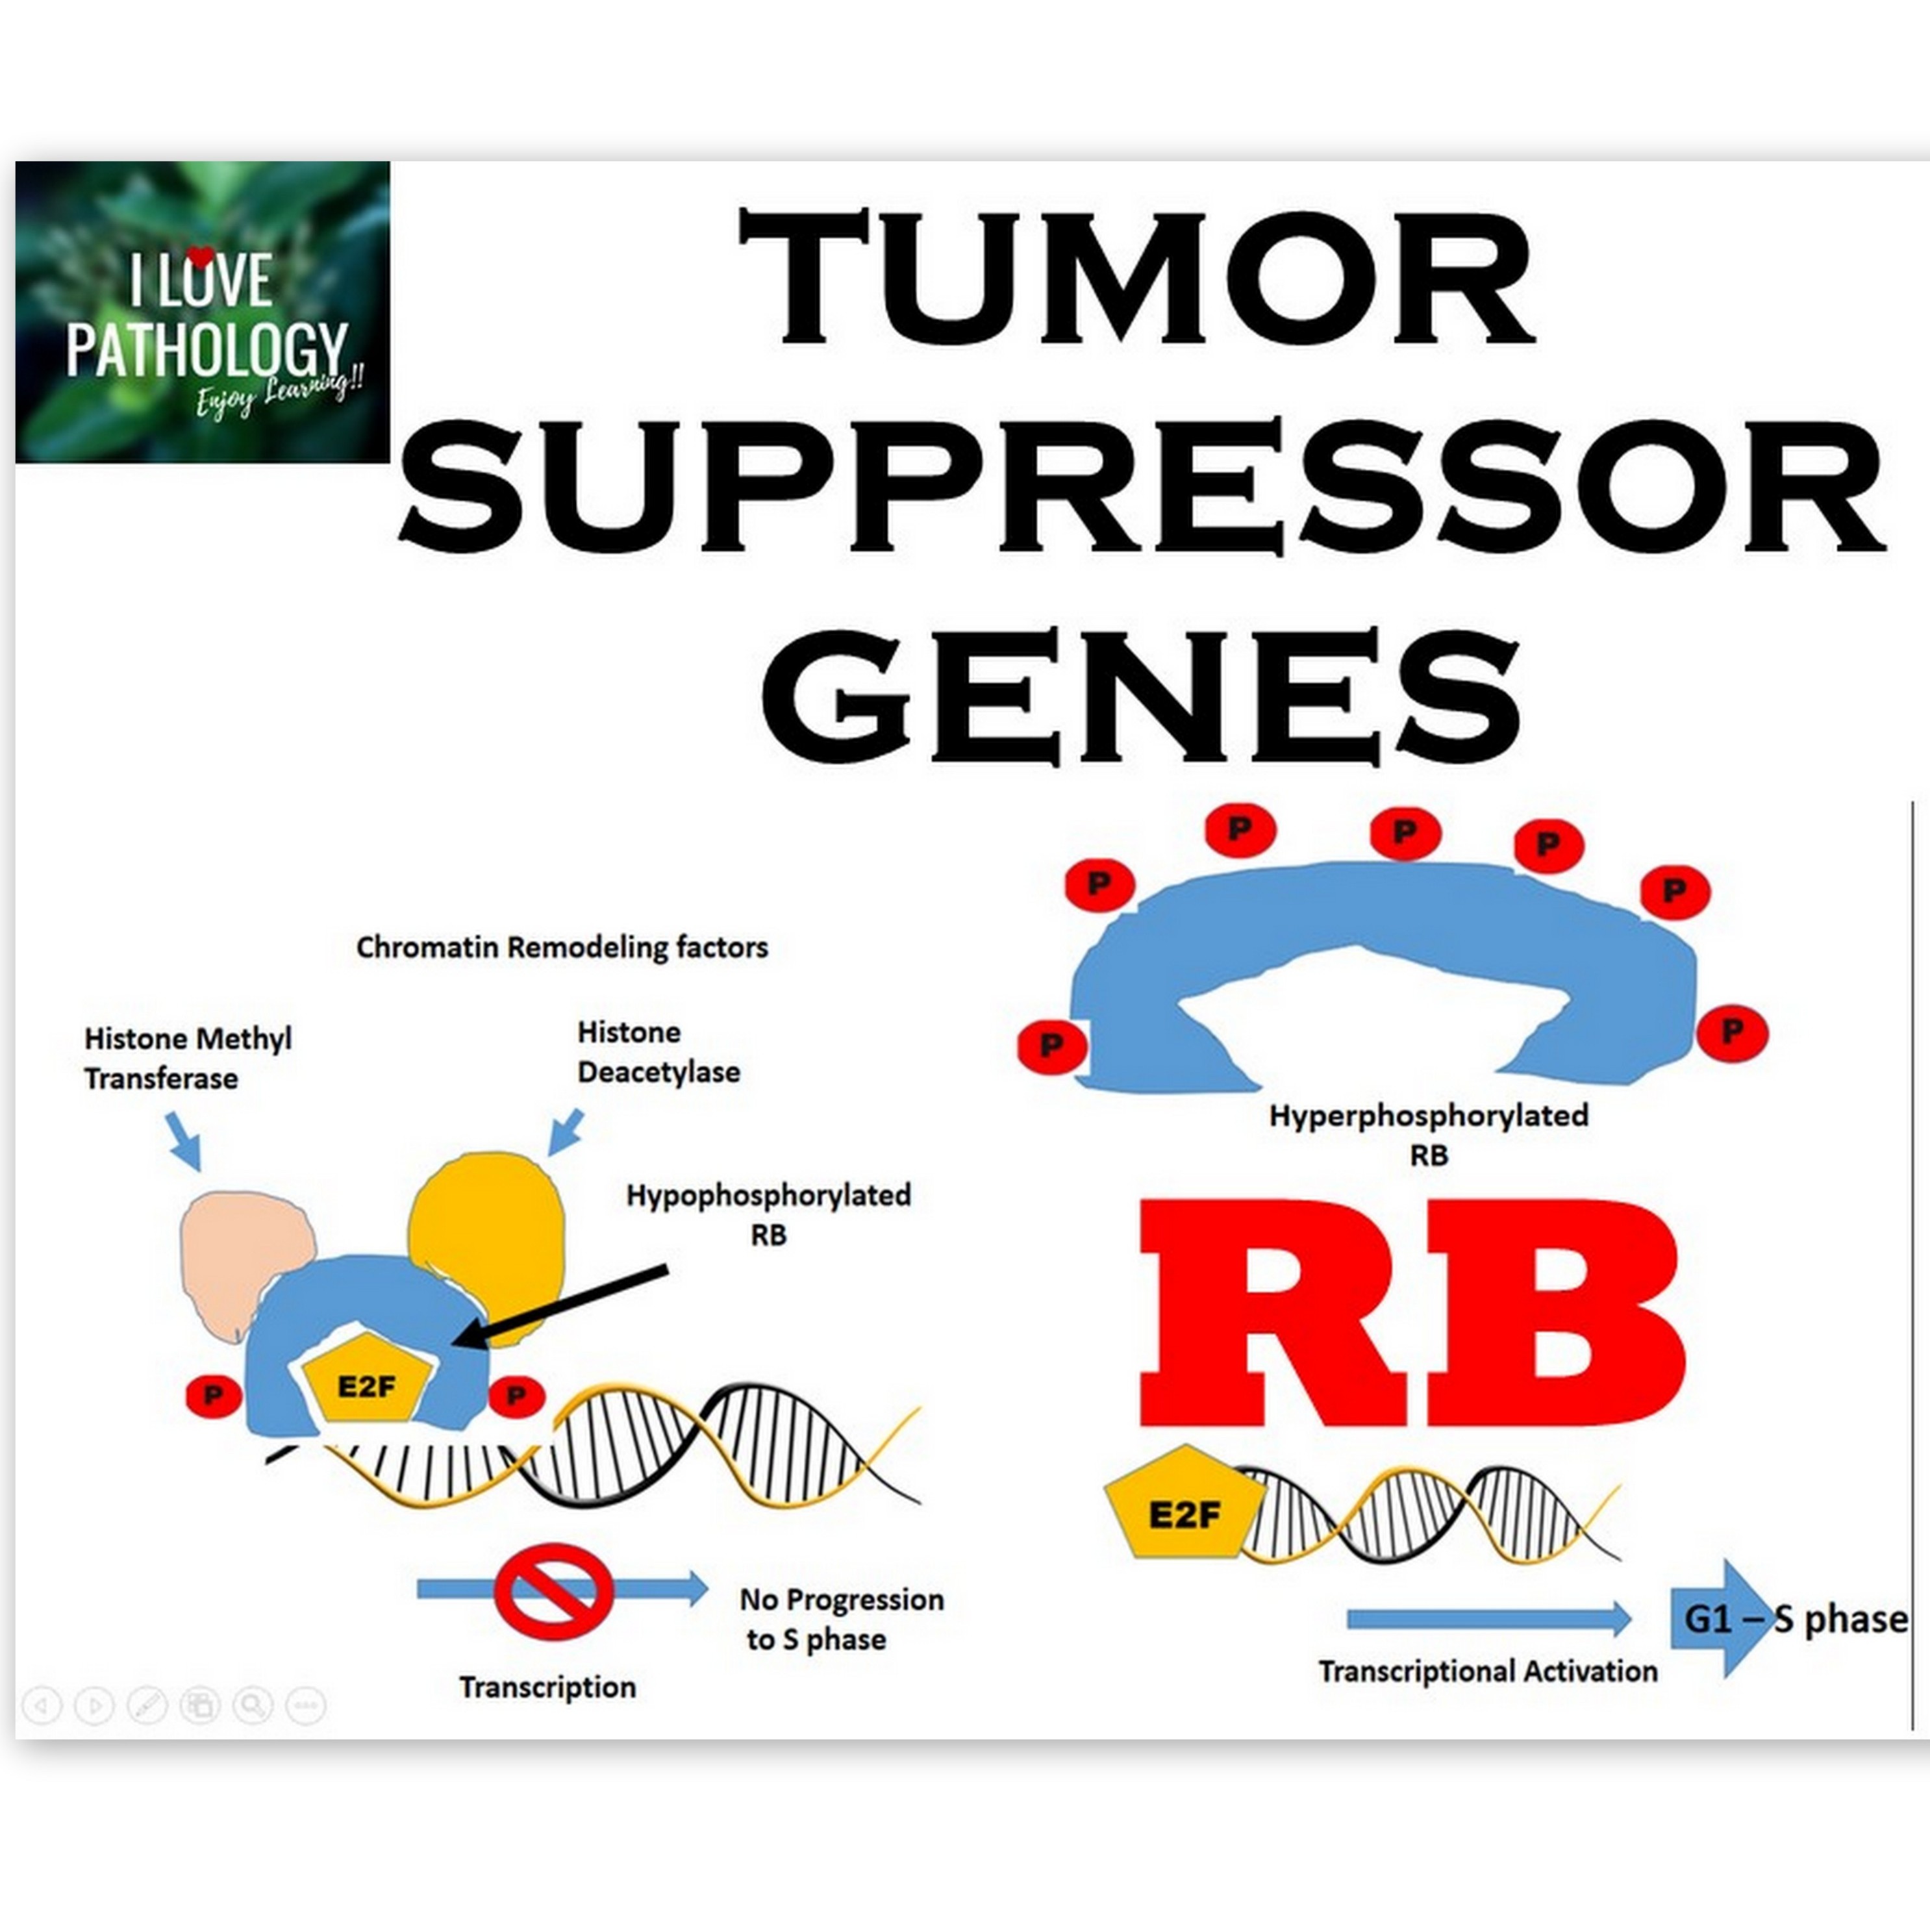 Tumor Suppressor Genes: RB Gene, Knudson’s Two Hit Hypothesis